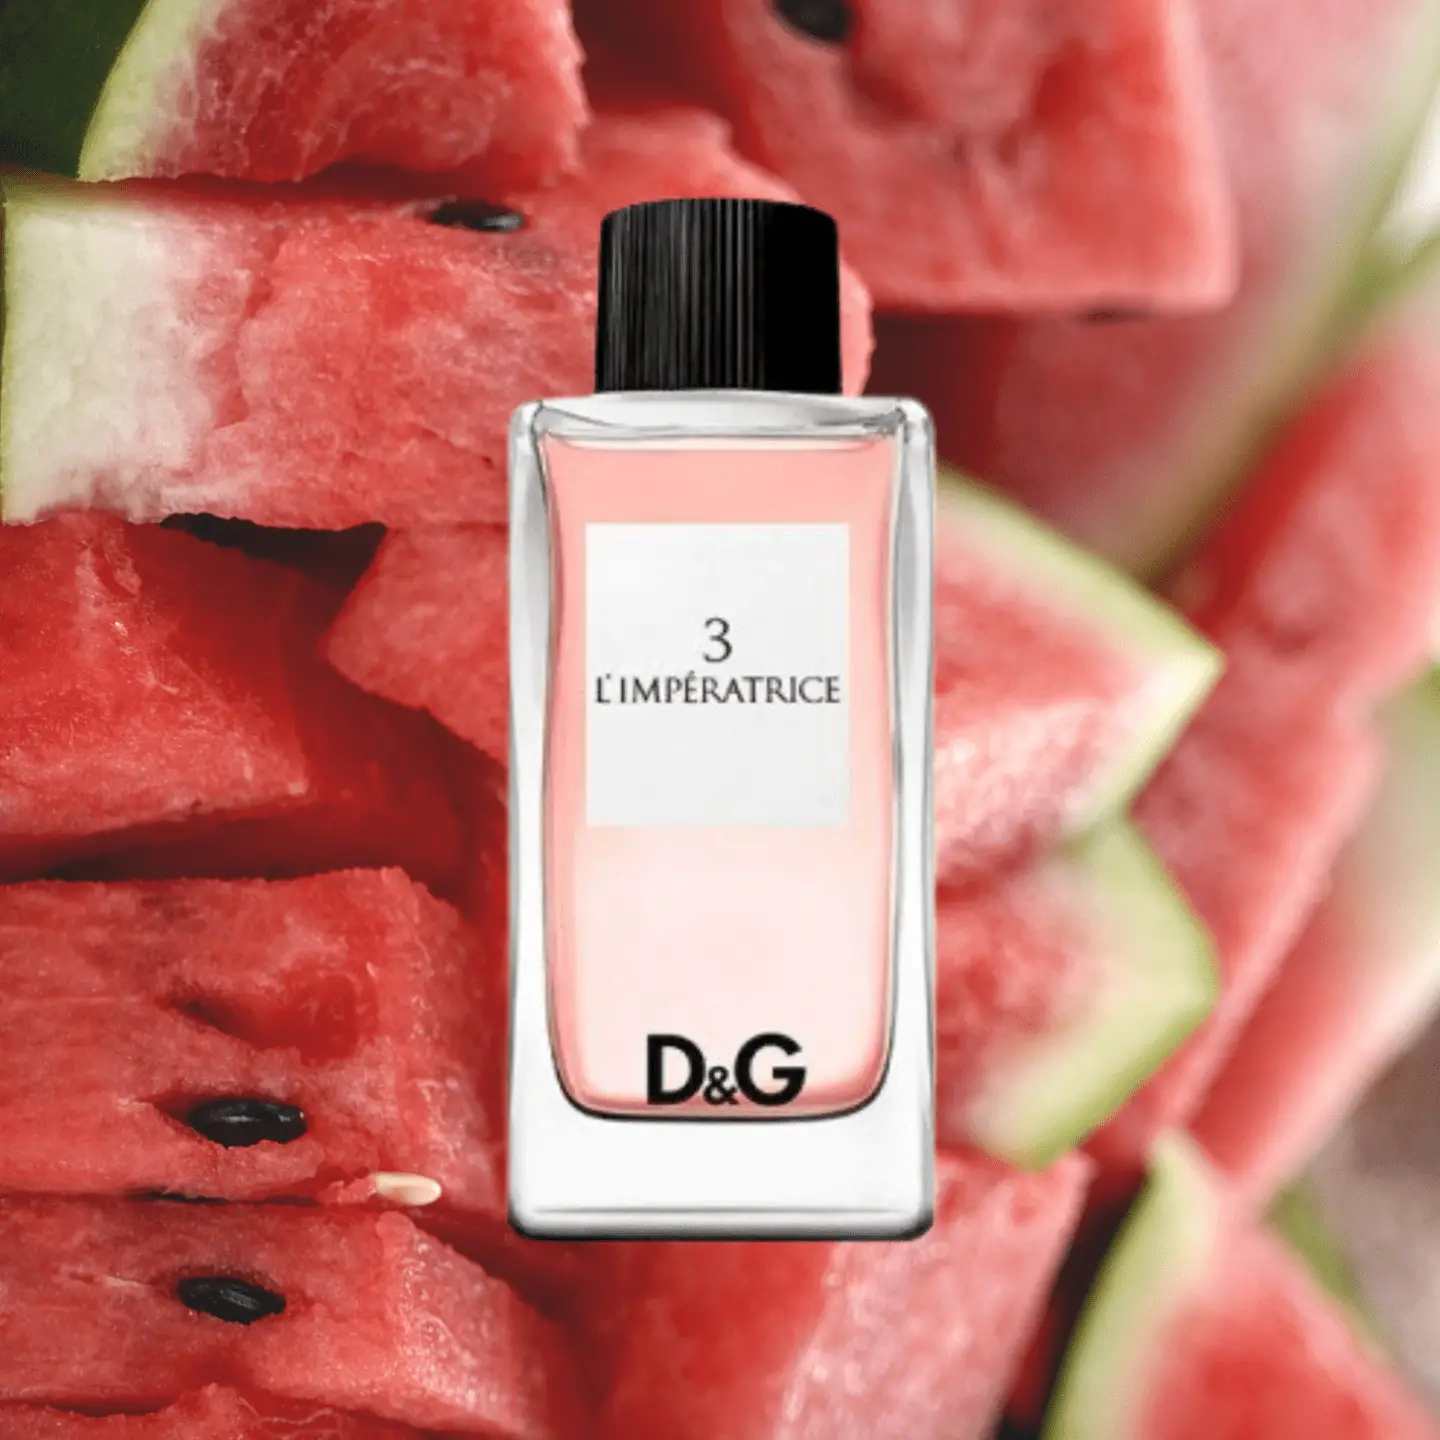 Dolce & Gabbana L'Imperatrice
Best Watermelon Perfumes